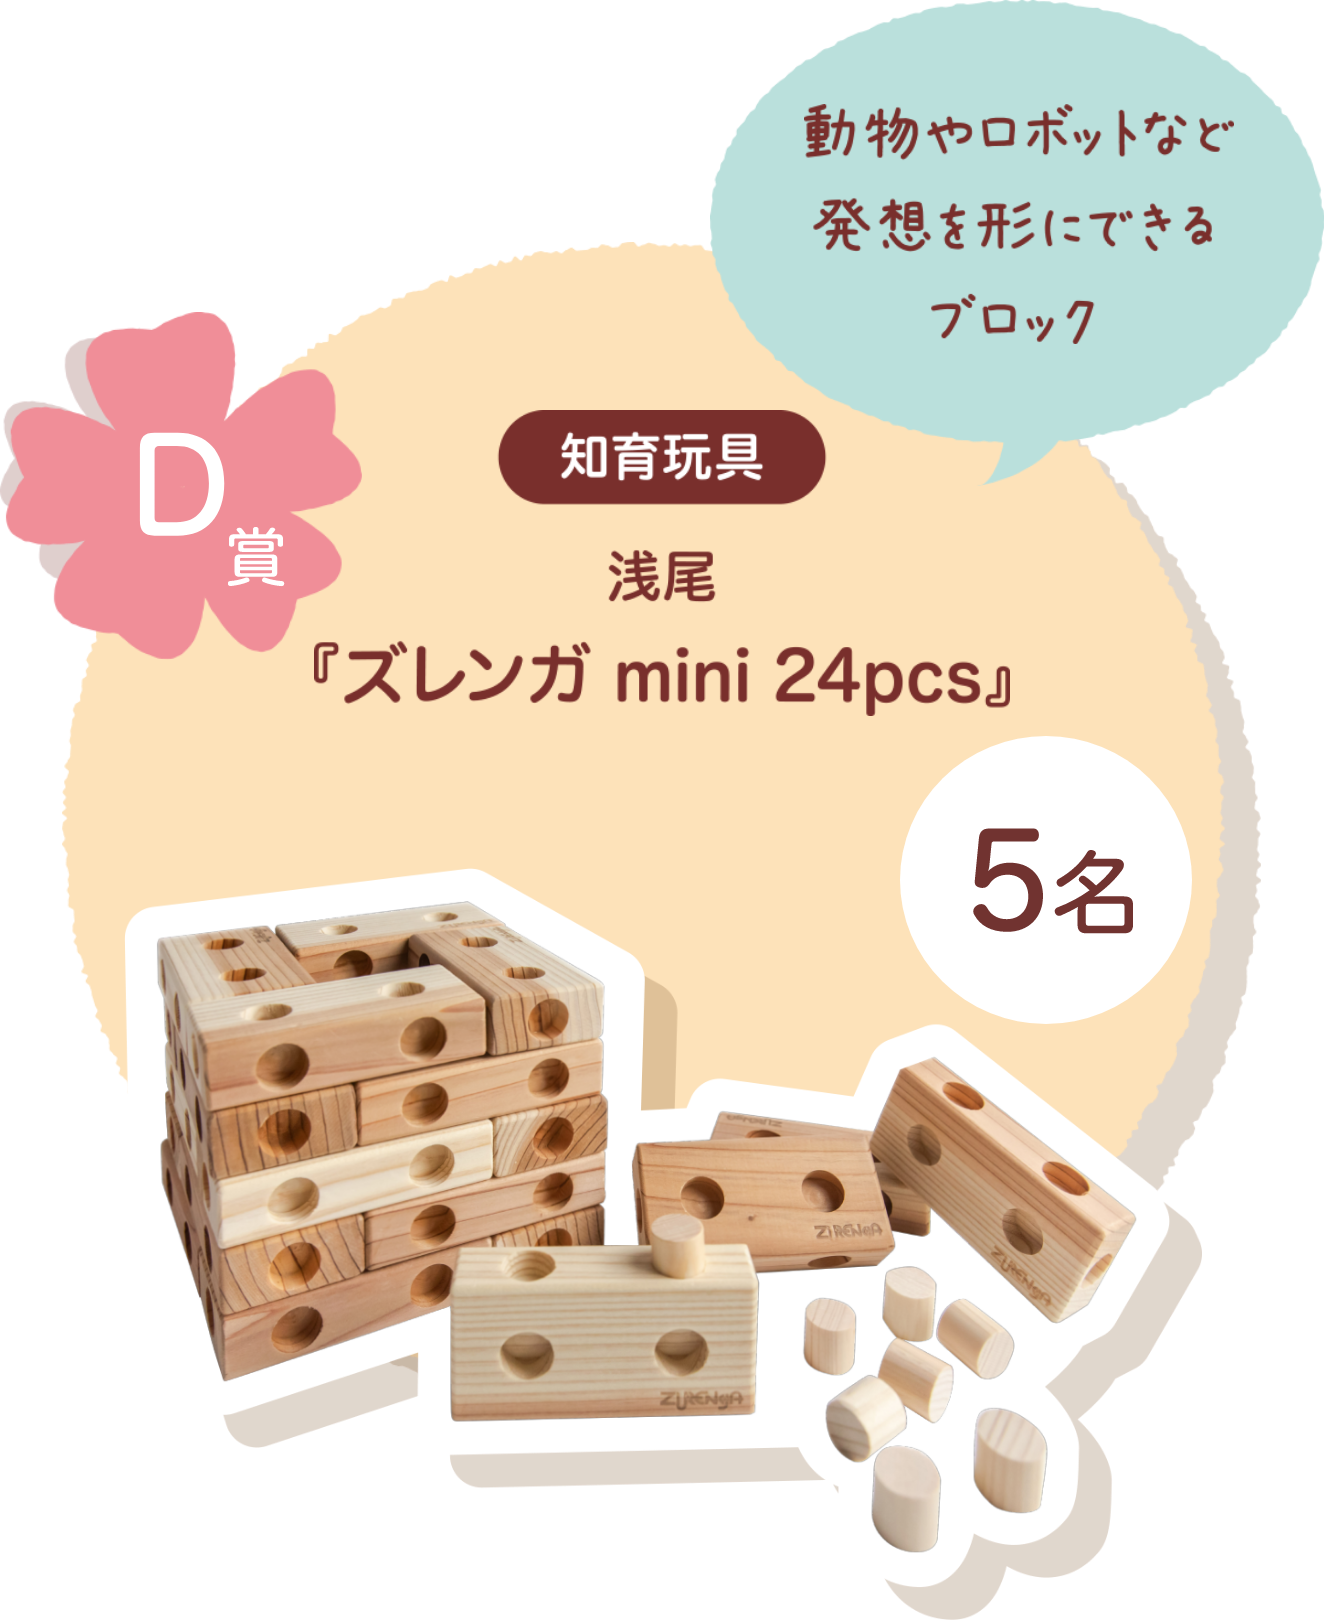 ■D賞:知育玩具 浅尾「スレンガ mini 24pcs」5名様